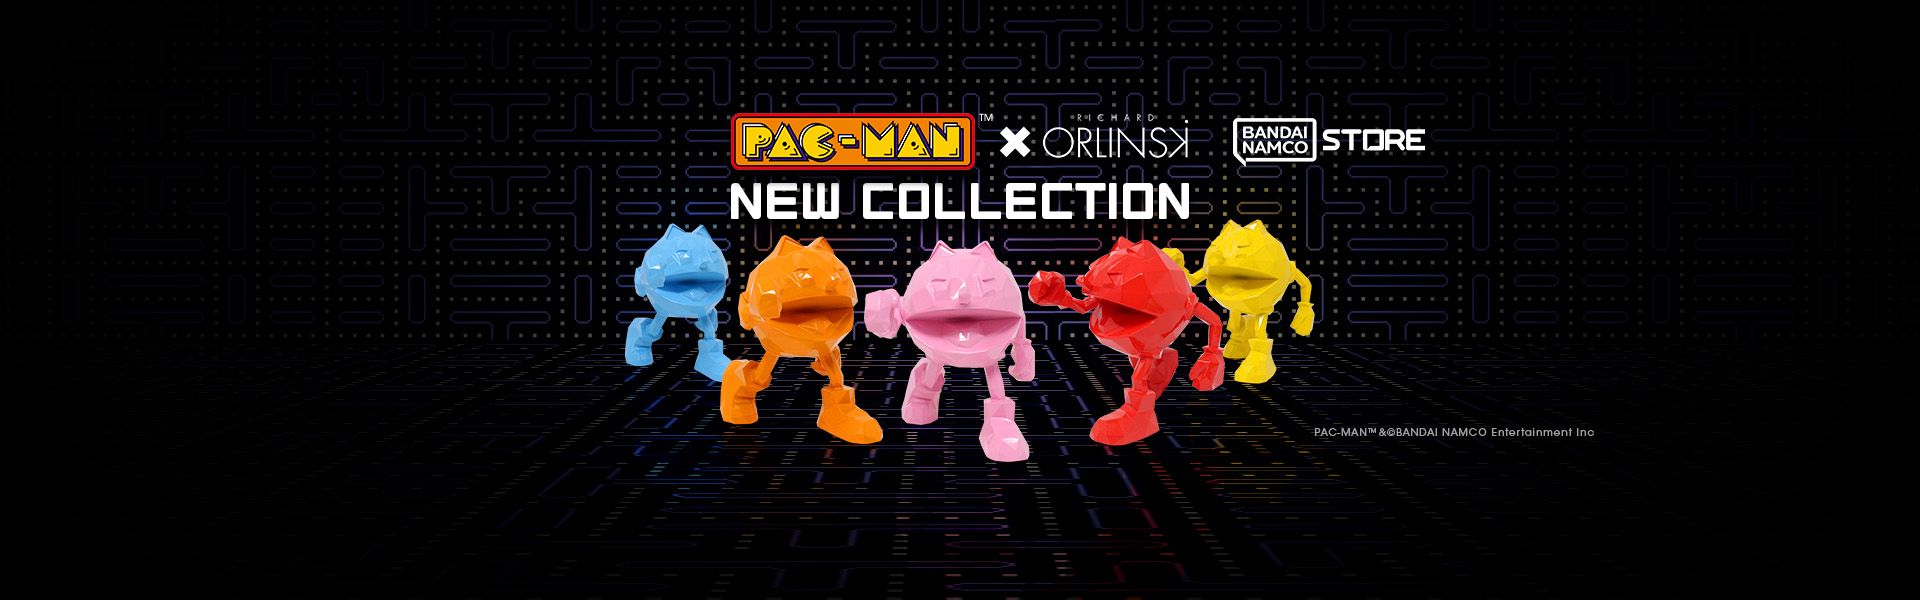 PAC-MAN x ORLINSKI : New Collection